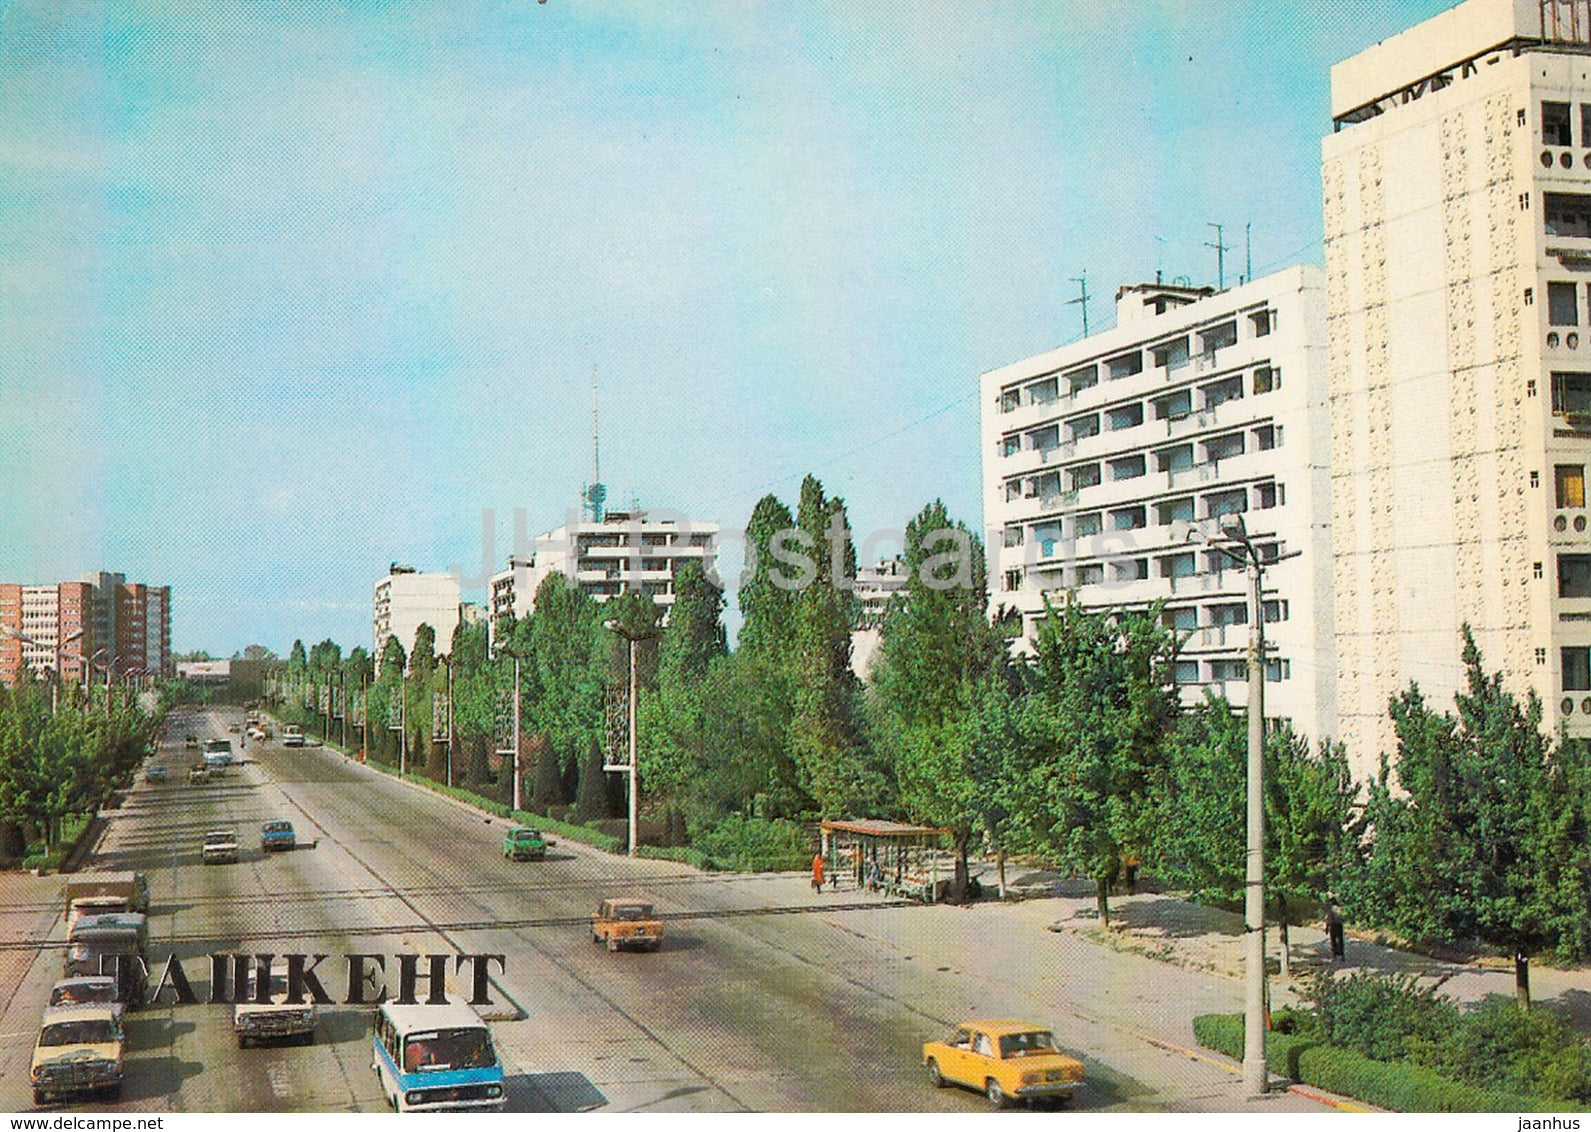 Tashkent - Lenin Prospekt - cars - 1983 - Uzbekistan USSR - unused - JH Postcards